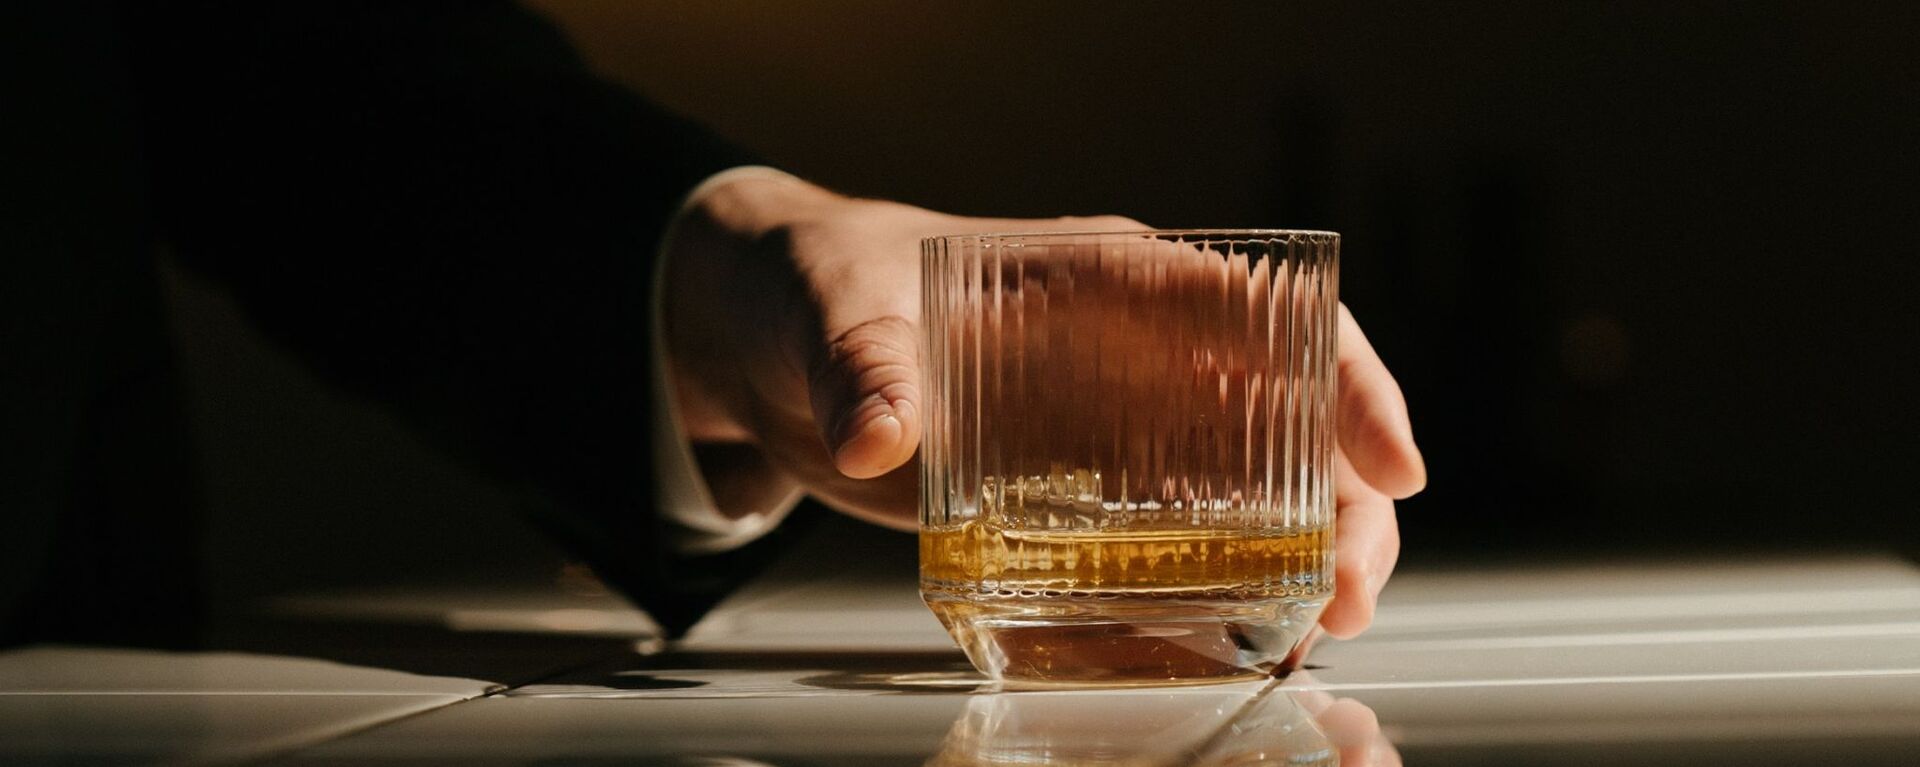 Un vaso de alcohol (imagen referencial) - Sputnik Mundo, 1920, 26.03.2021